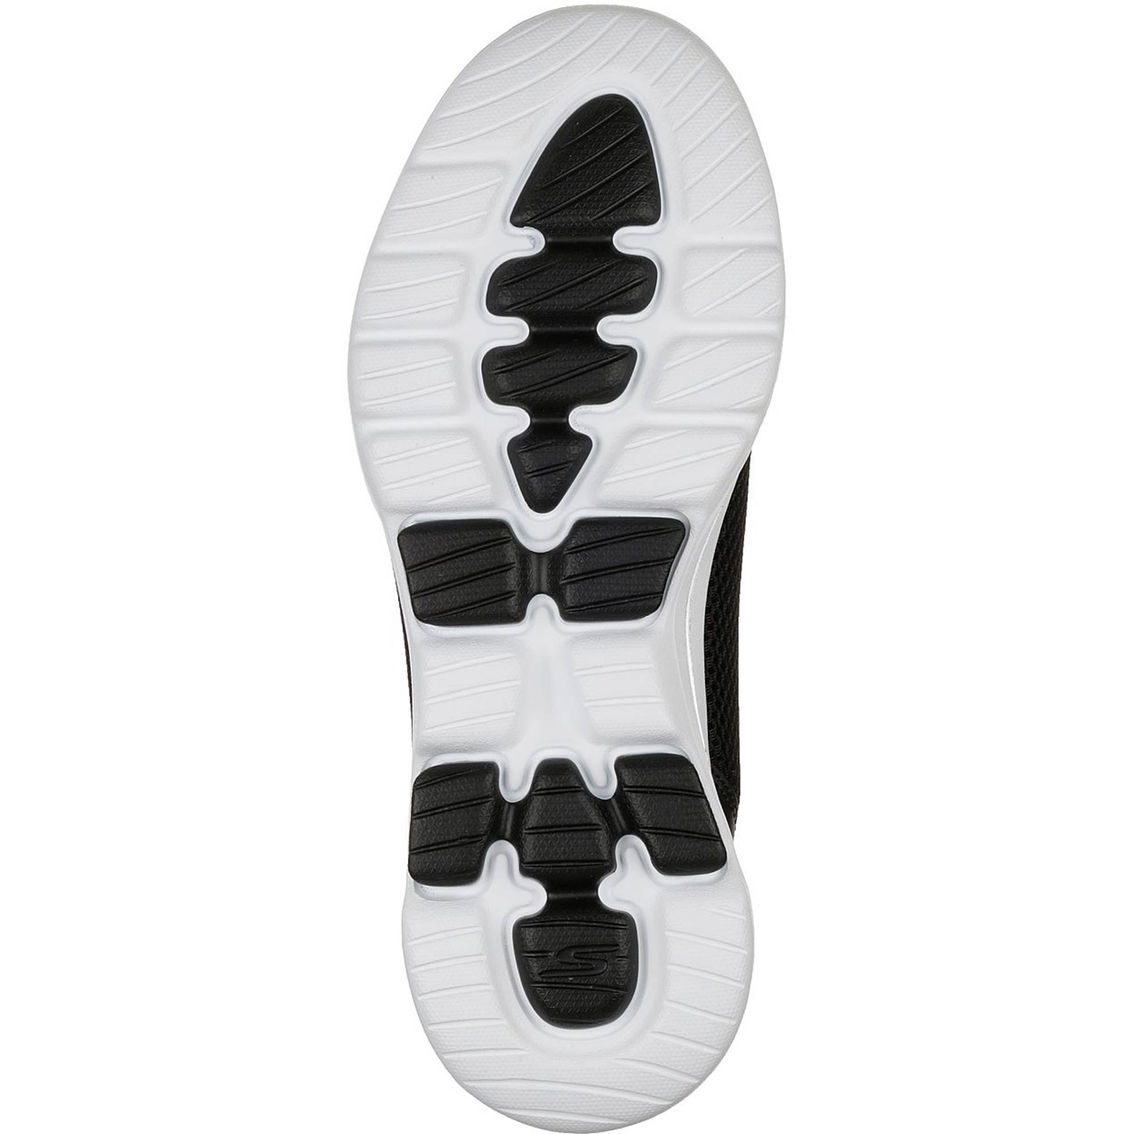 Skechers Women's Go Walk 5 Athletic Shoes - Image 5 of 6